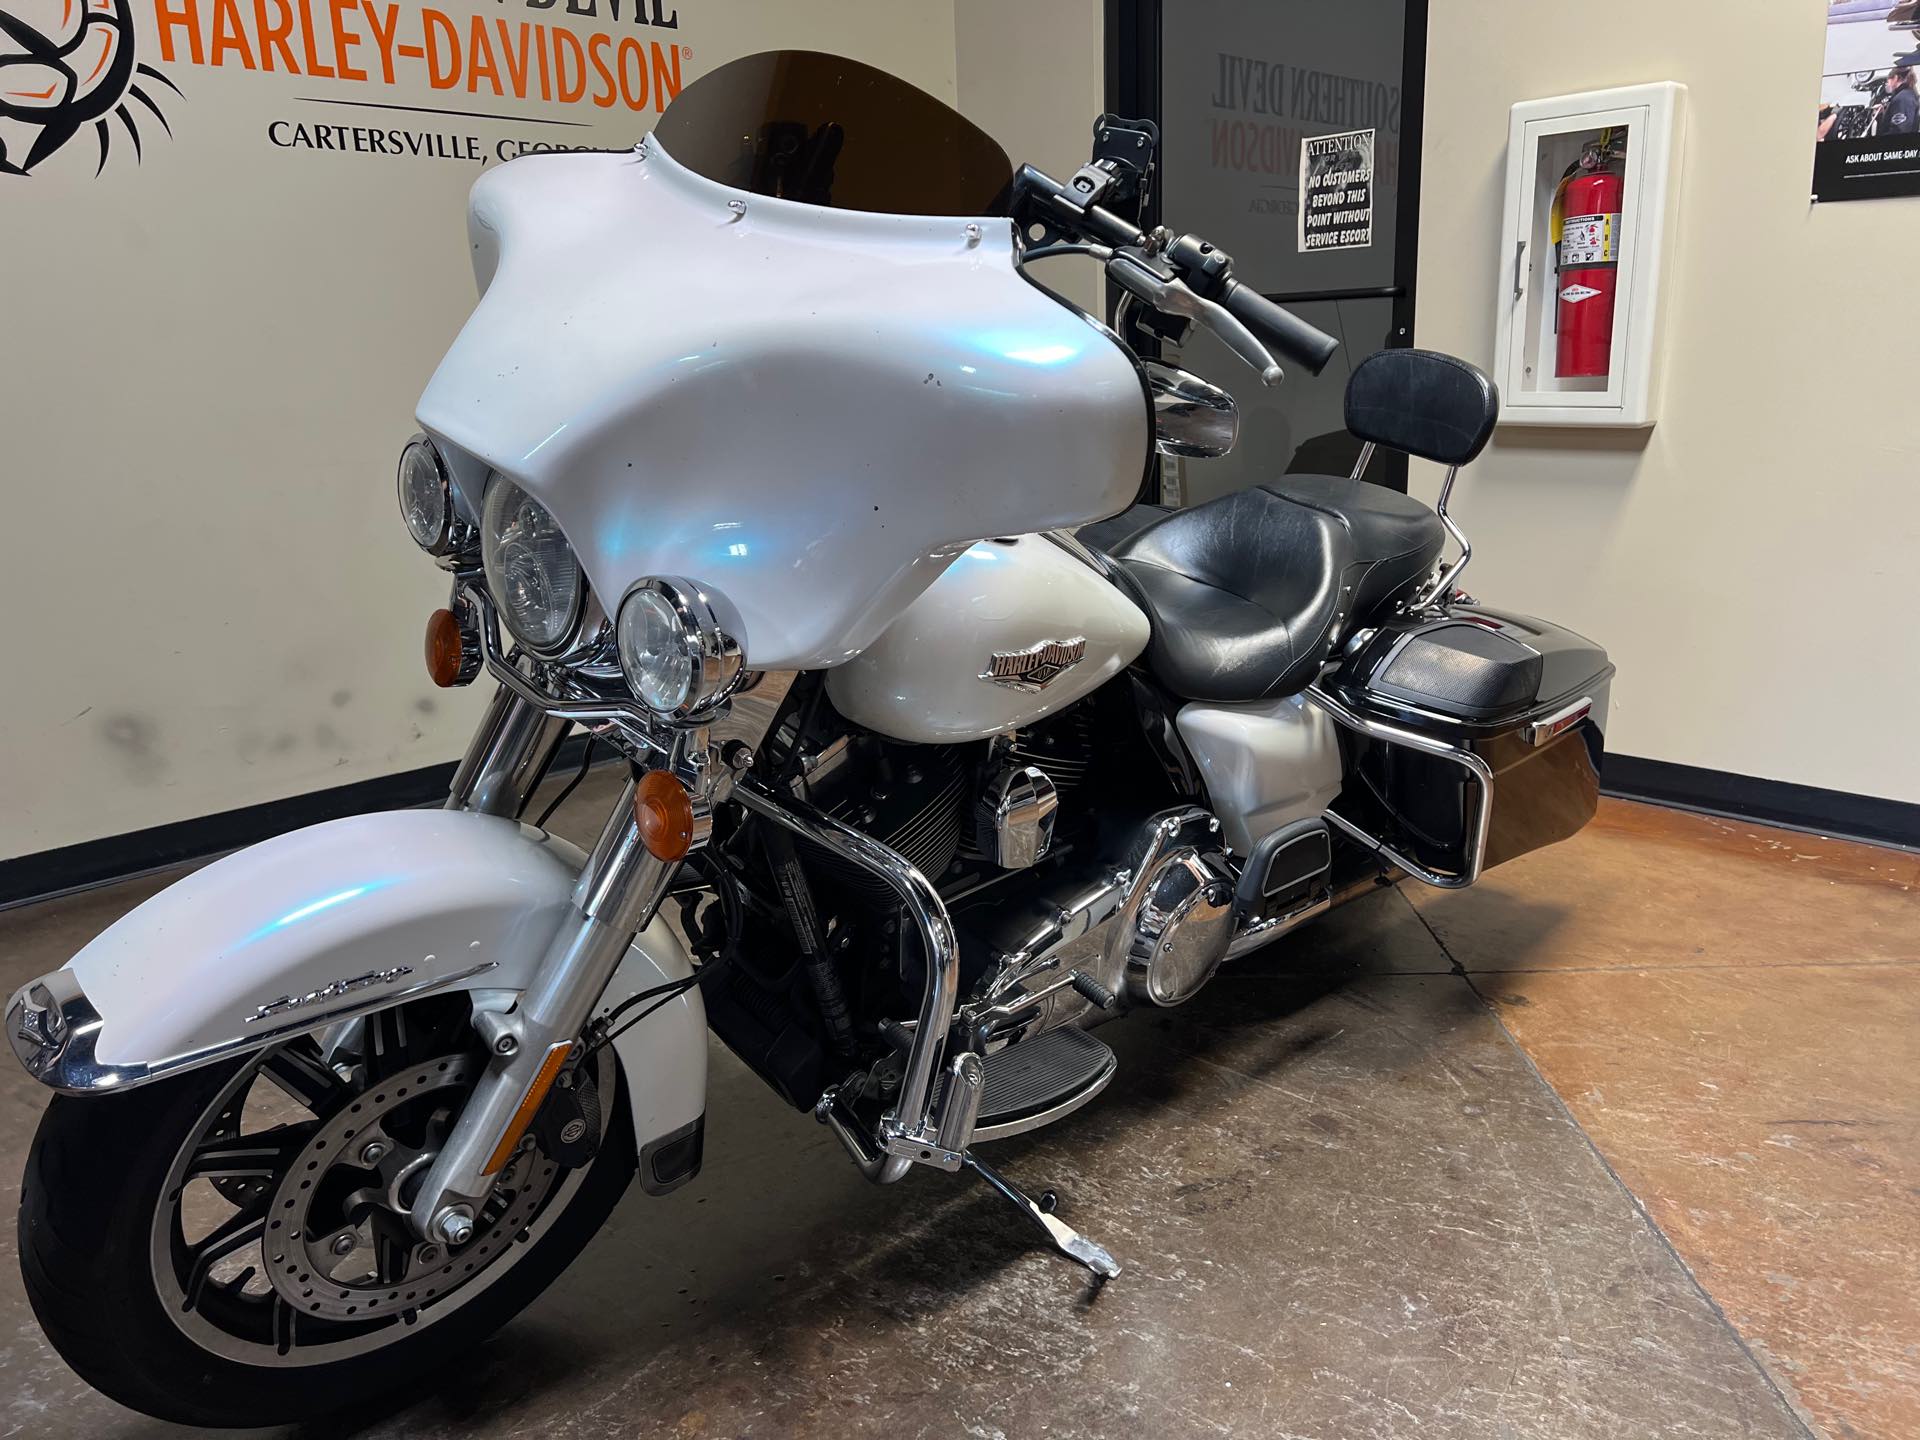 2014 Harley-Davidson Road King Base at Southern Devil Harley-Davidson